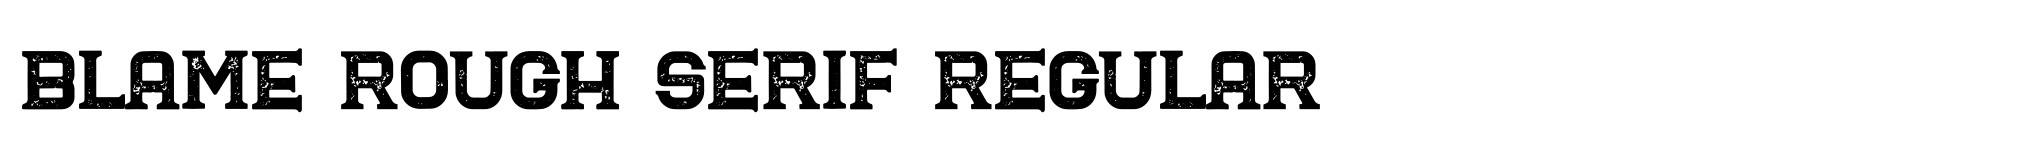 Blame Rough Serif Regular image